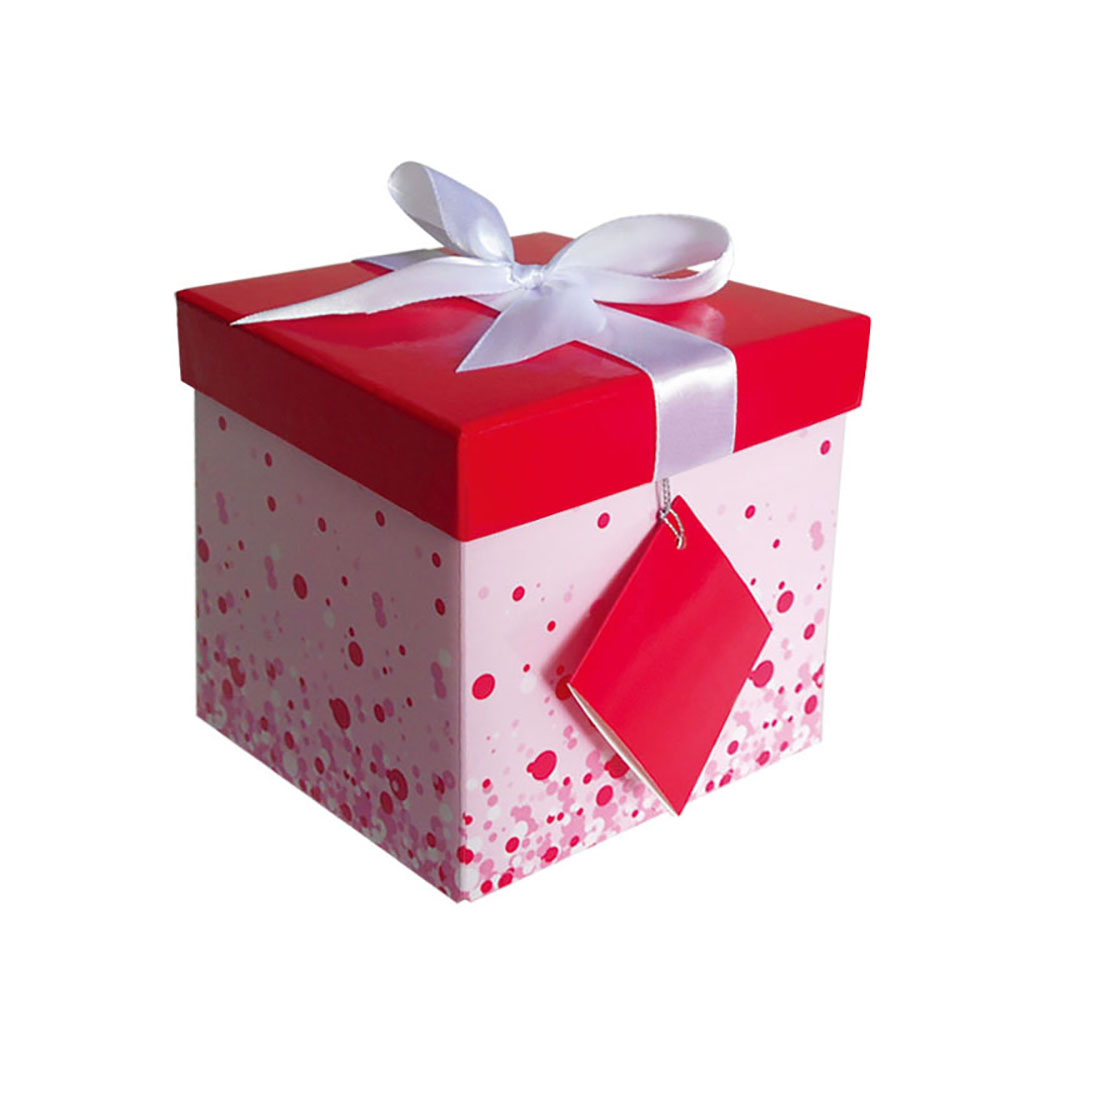 Caja para TU regalo - Pequeña Mole / caja-para-regalo